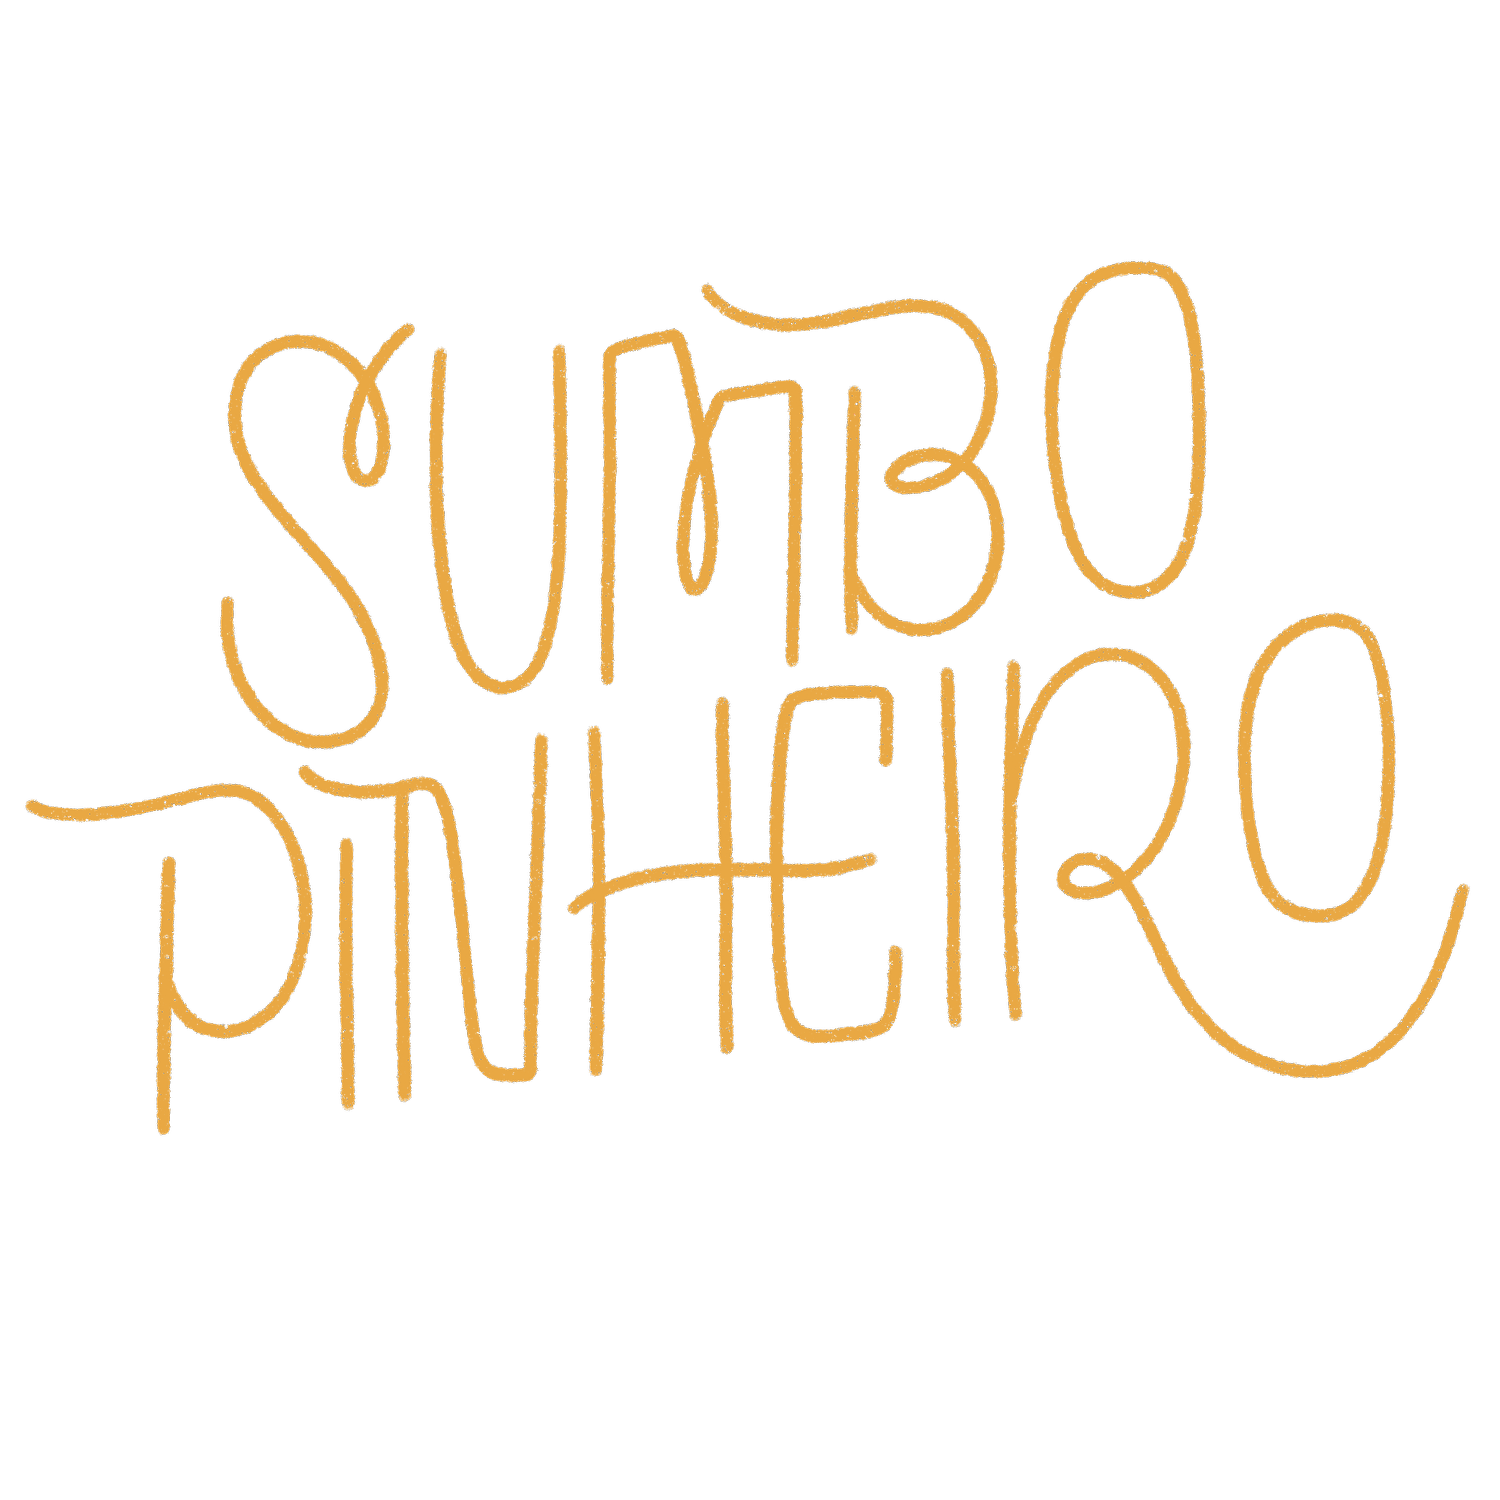 Sumbo Pinheiro